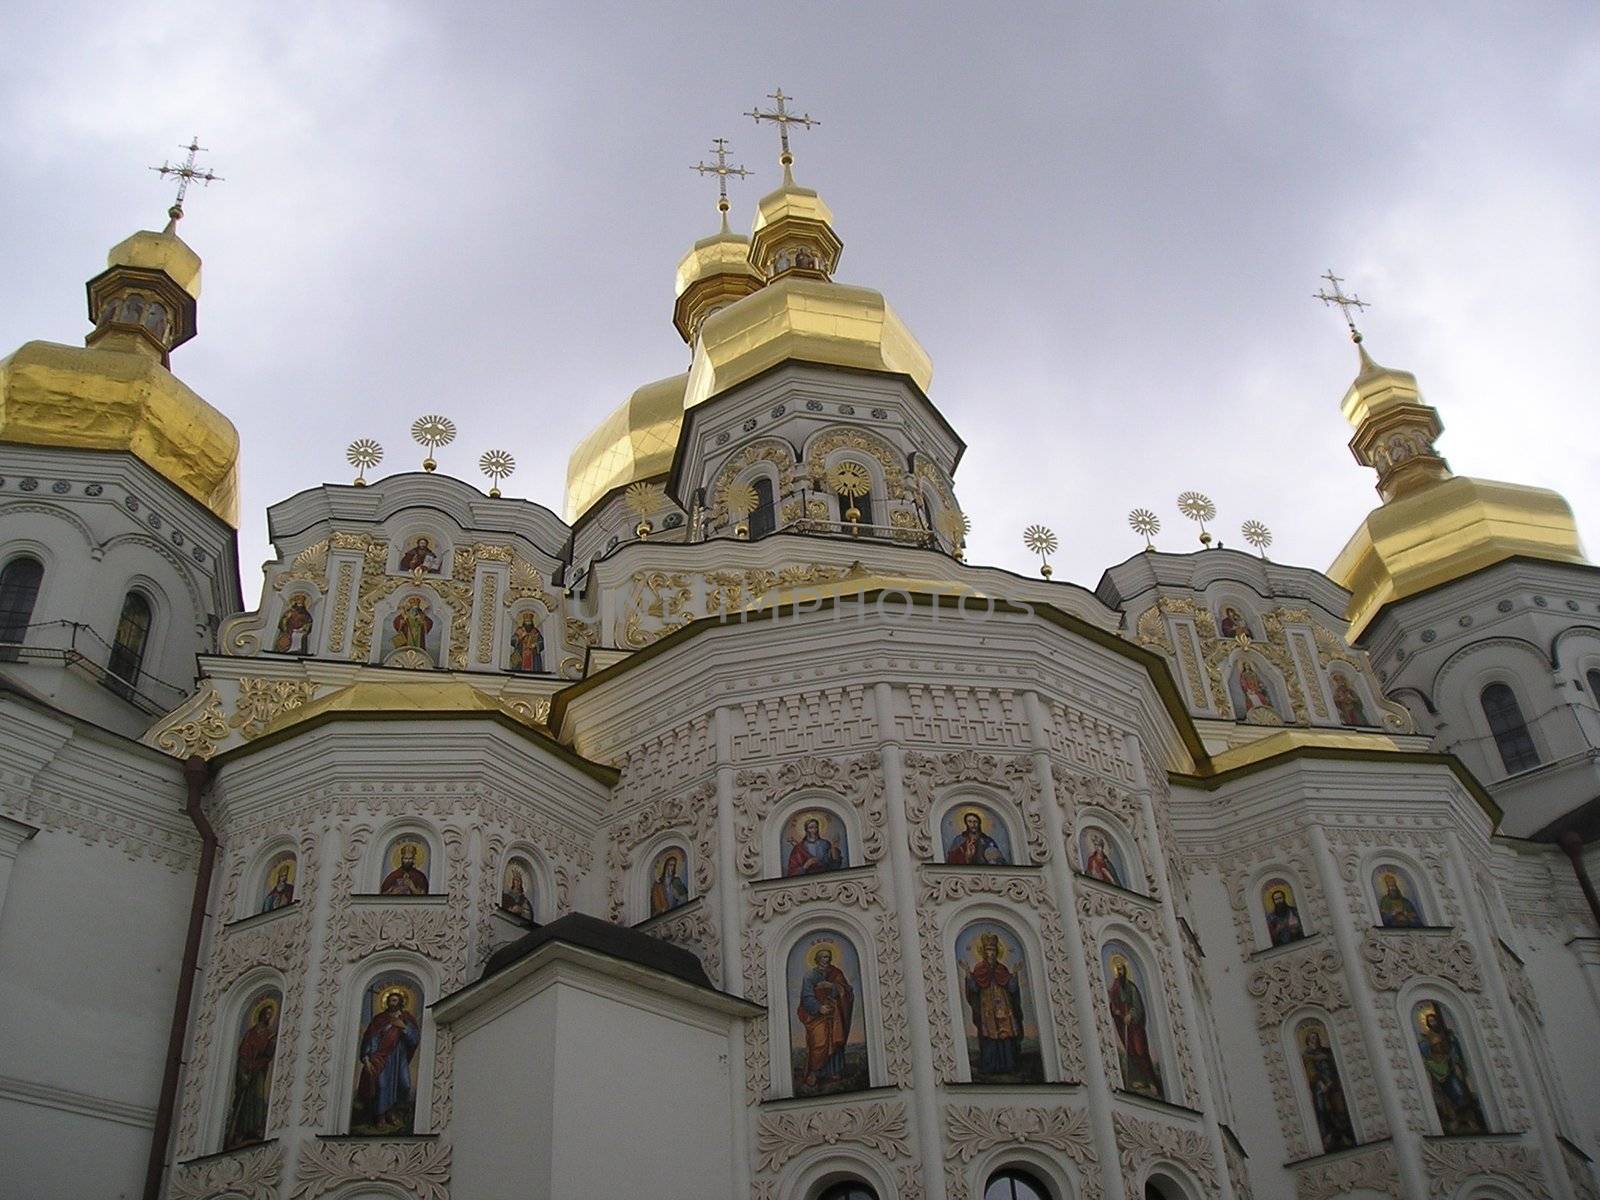 Kievo-pecherskaya Lavra in Kiev. Holy place for all eastern christians.